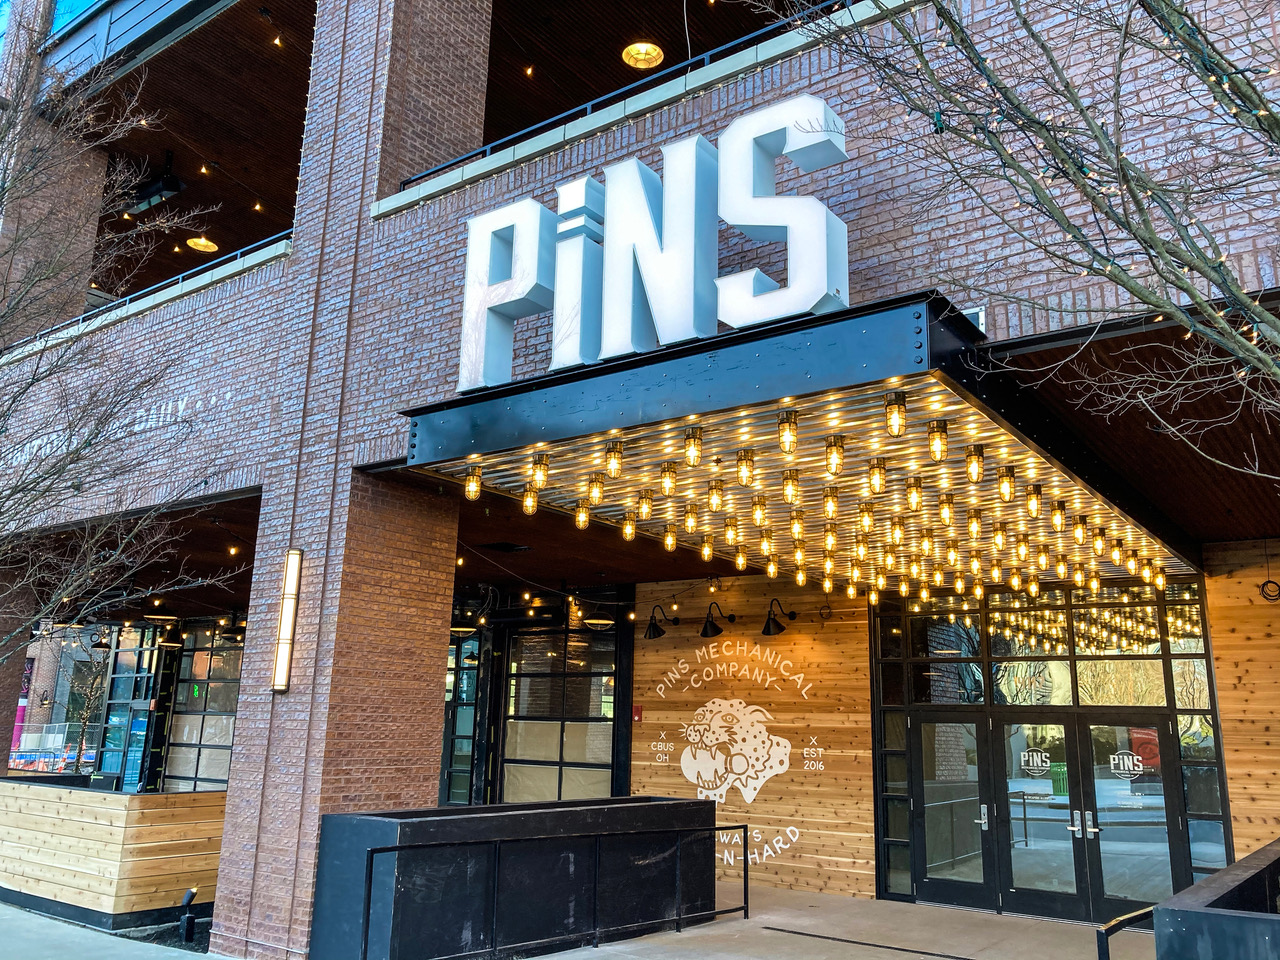 Pins to open tomorrow at Easton – 614NOW